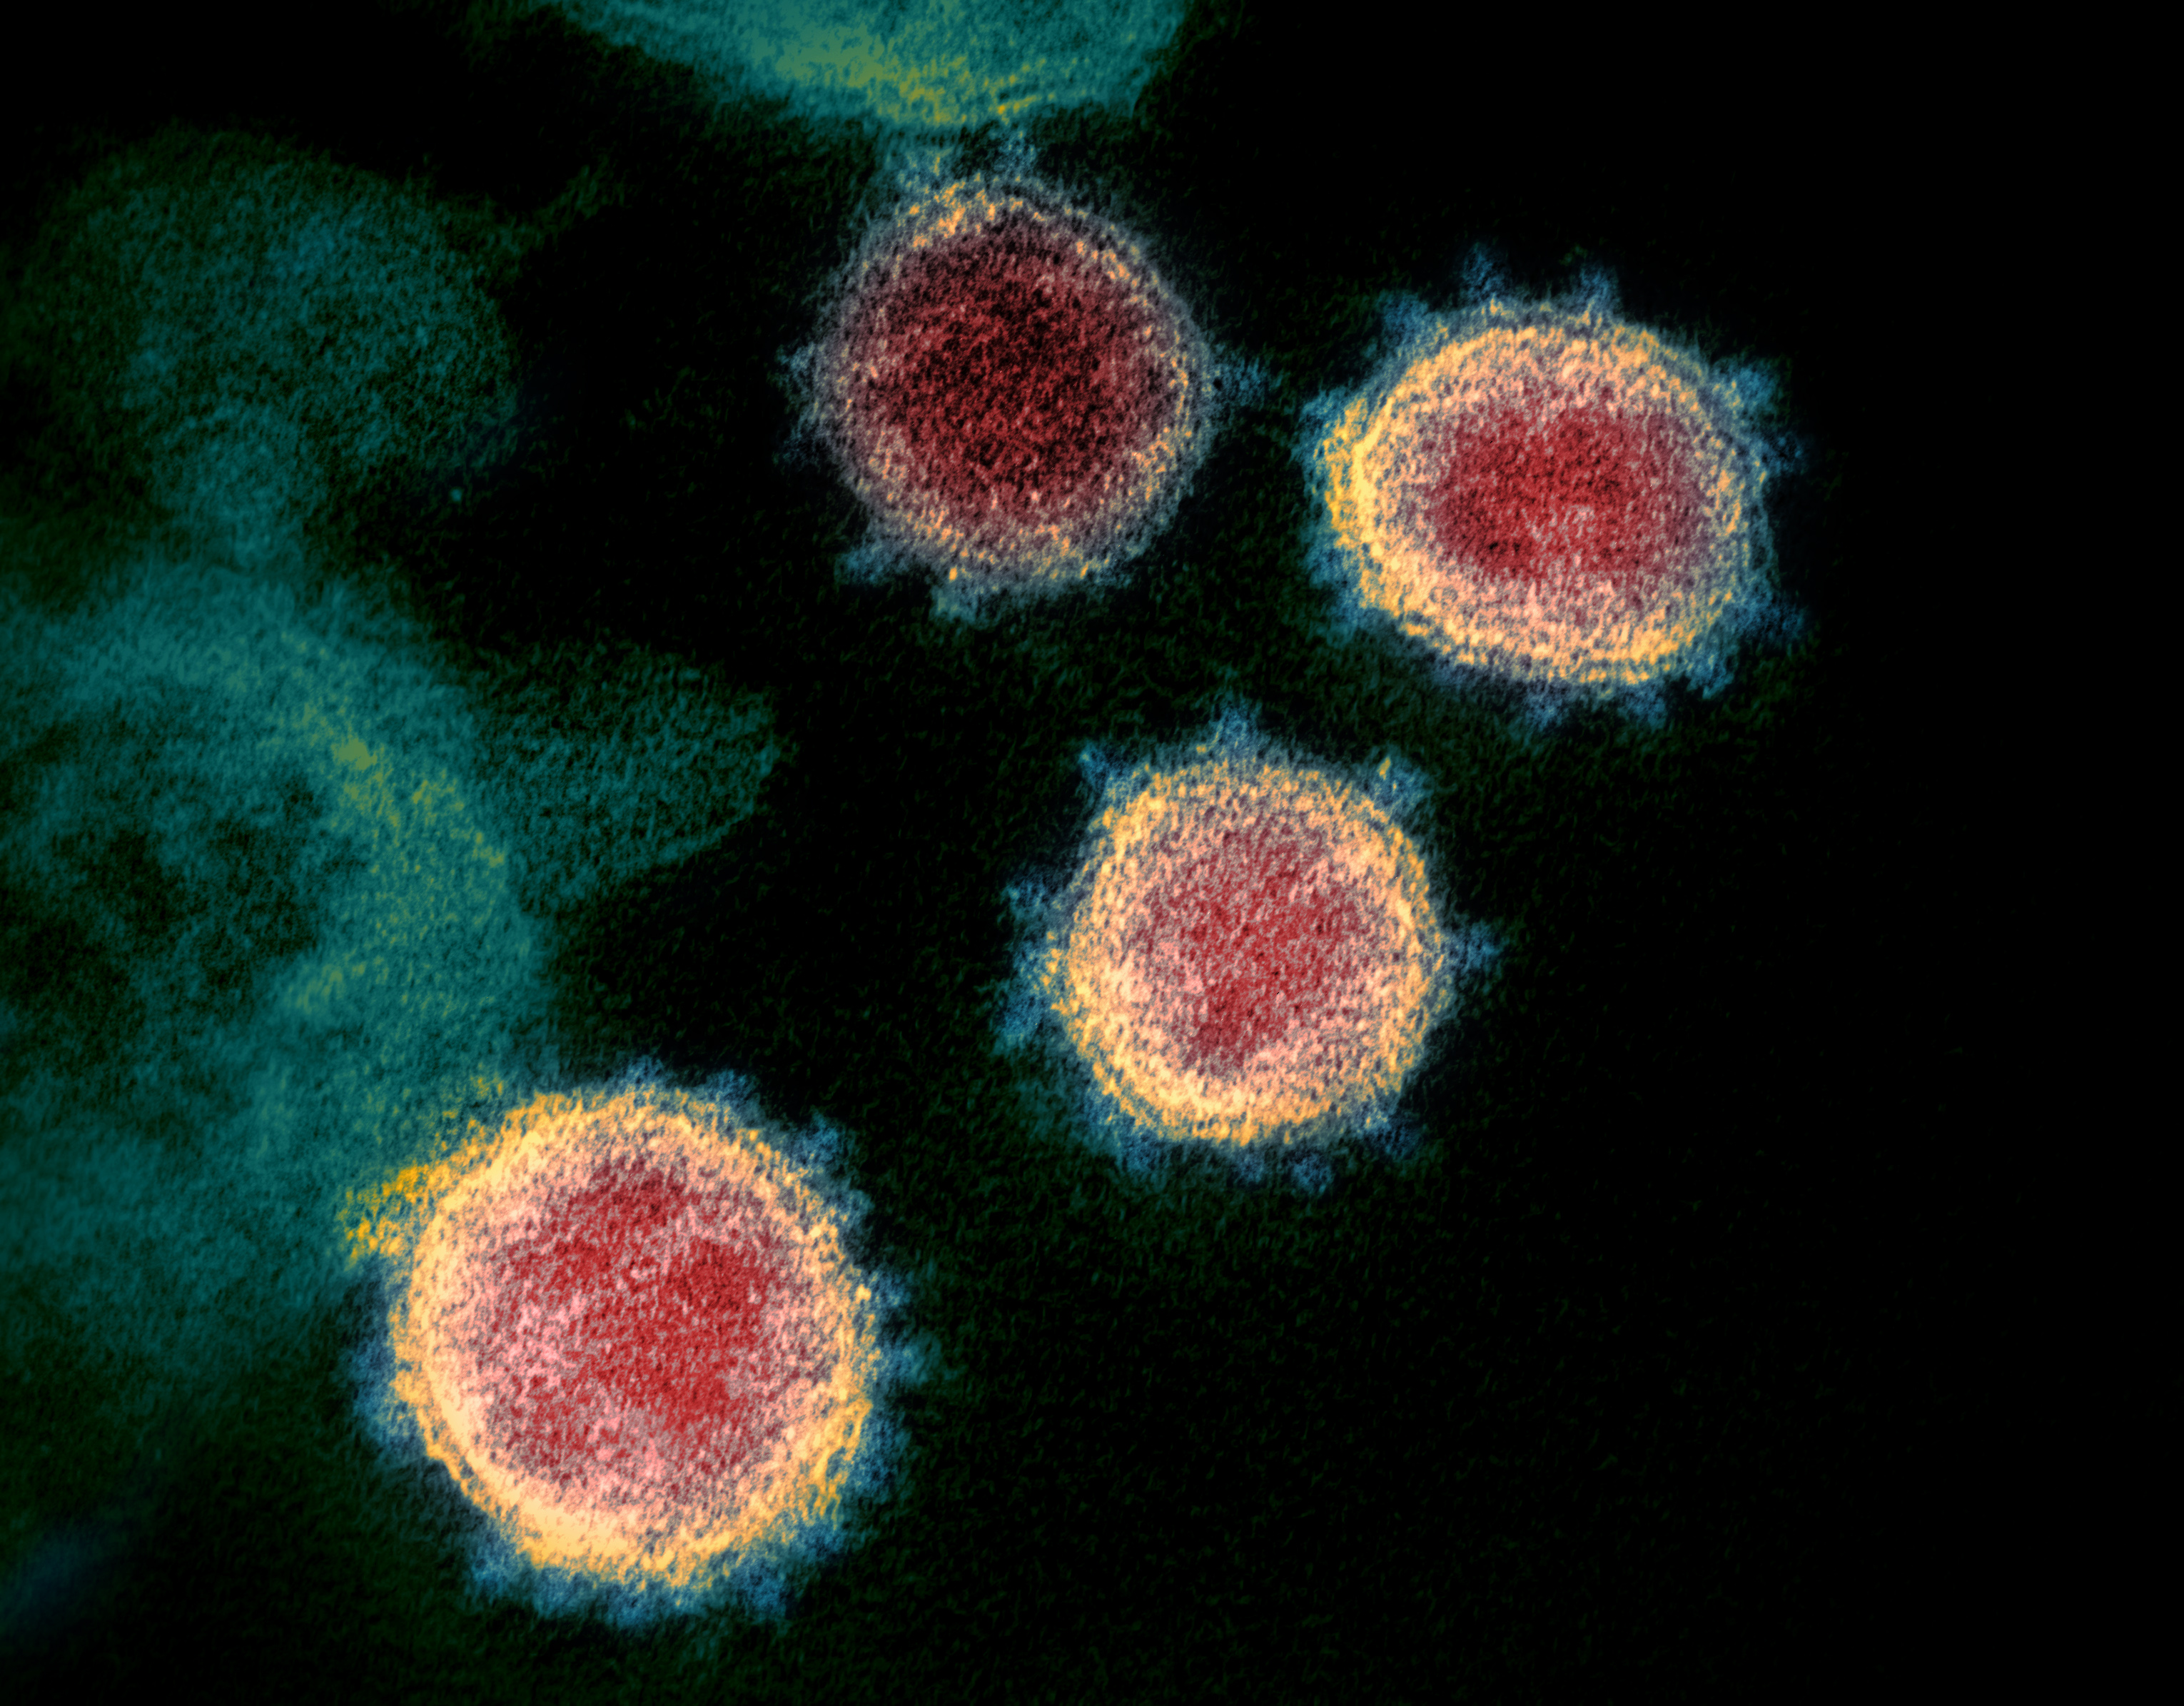 Transmission electron microscope image of SARS-COV-2 virus